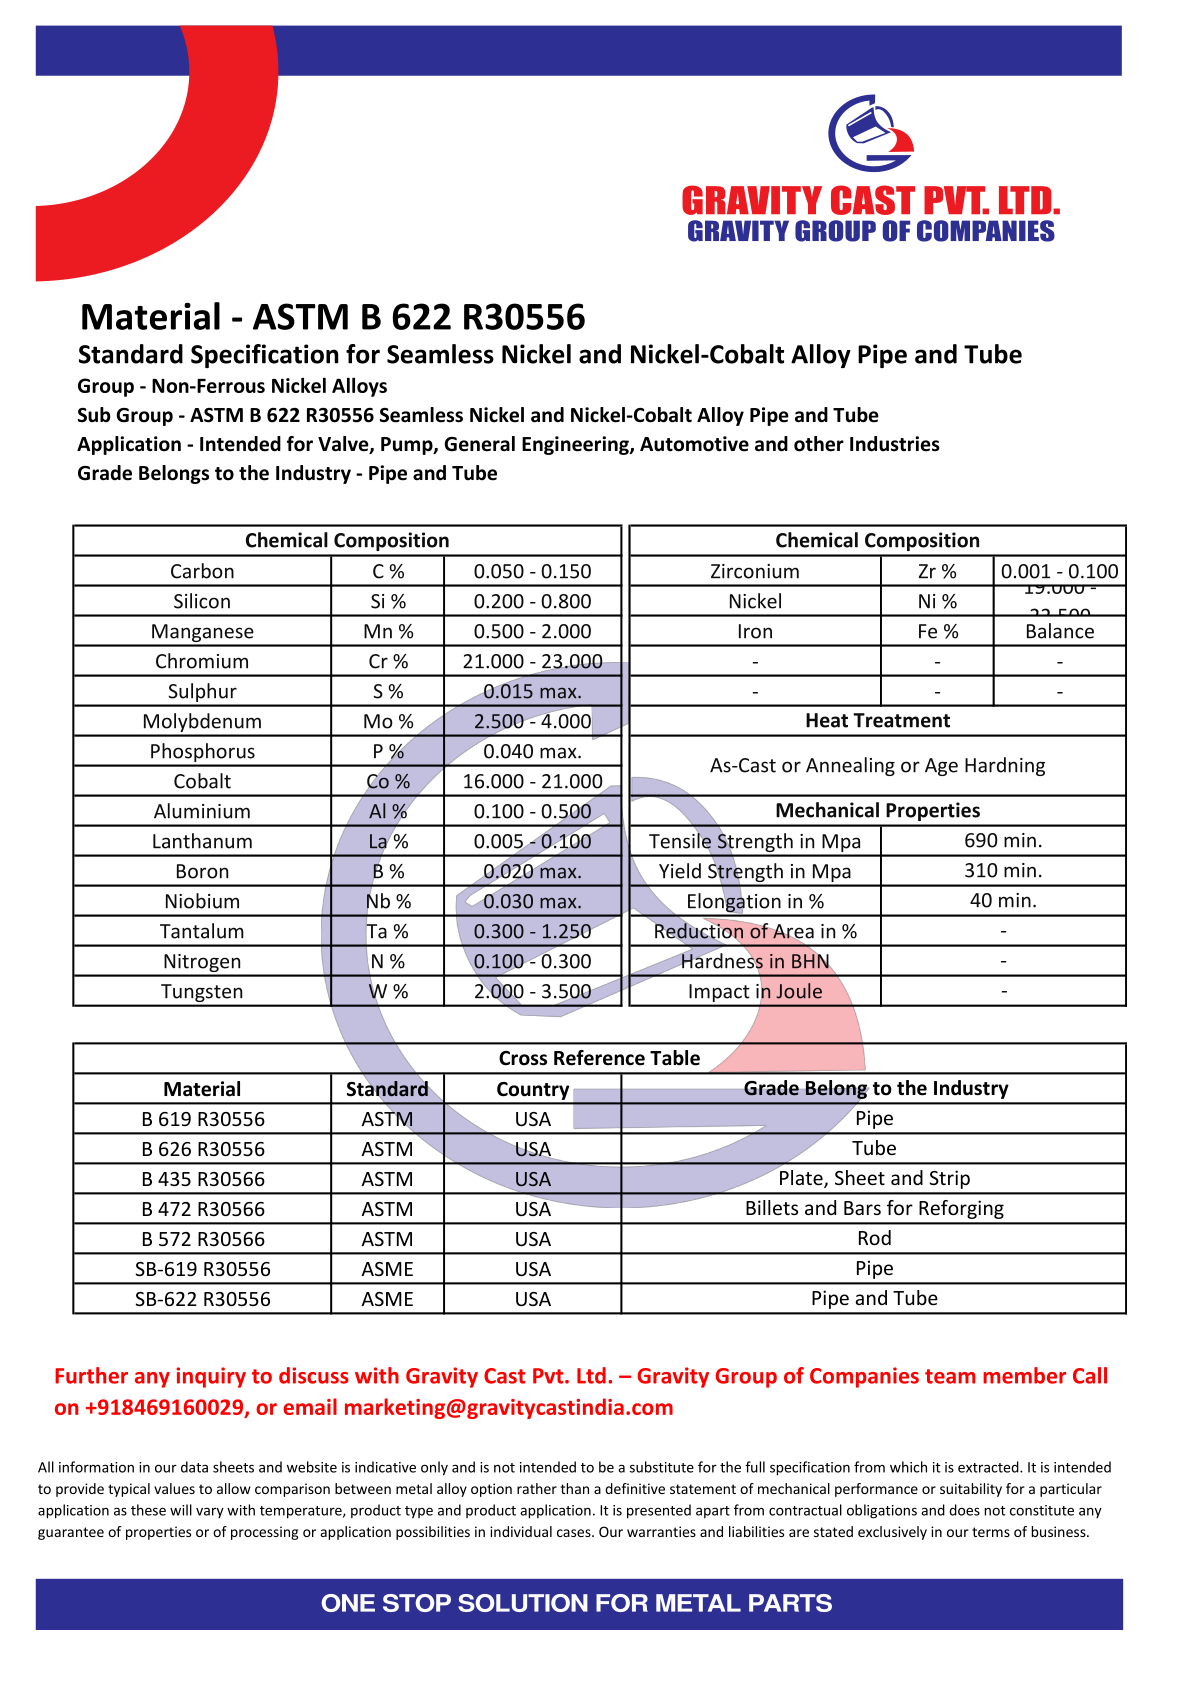 ASTM B 622 R30556.pdf